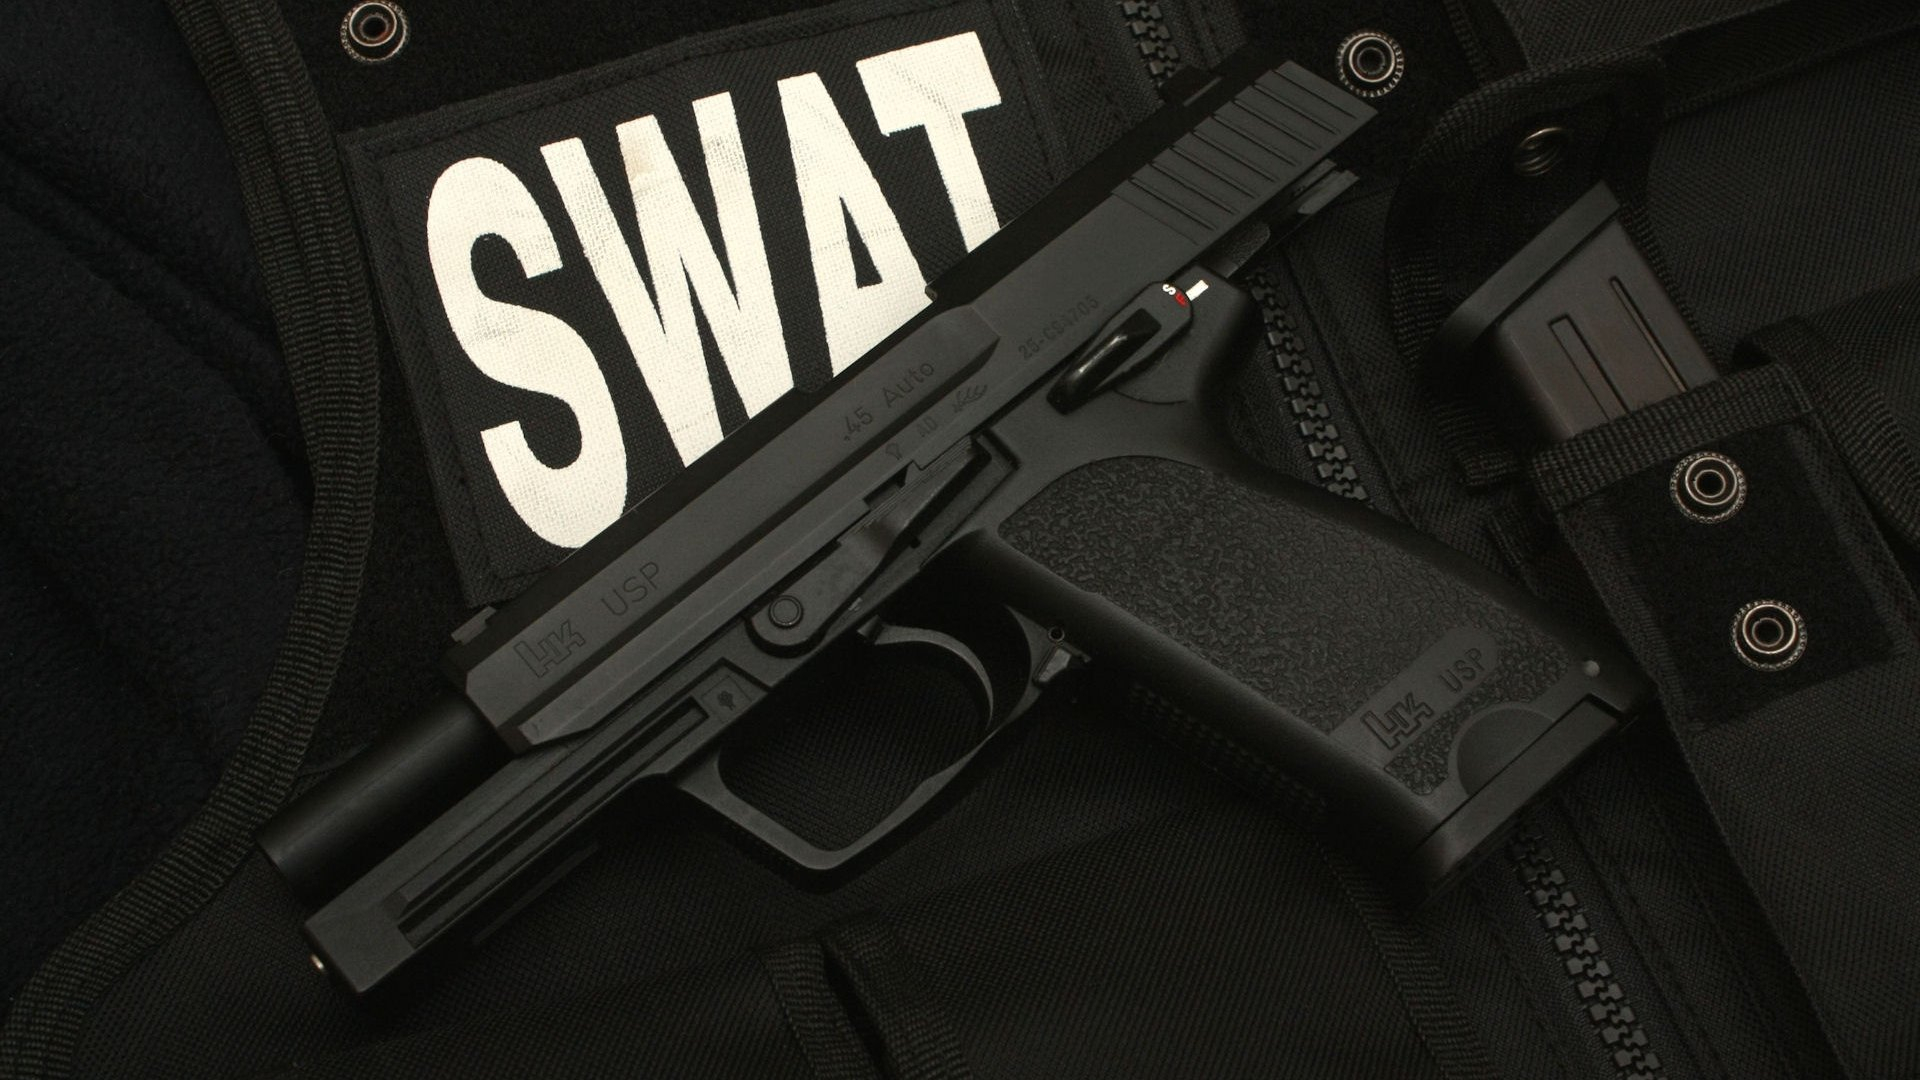 1920x1080 Free download SWAT TEAM police crime emergency weapon gun wallpaper background [] for your Desktop, Mobile \u0026 Tablet | Explore 48+ Police SWAT Team Wallpapers | Swat Team Wallpaper, Cool SWAT Wallpaper